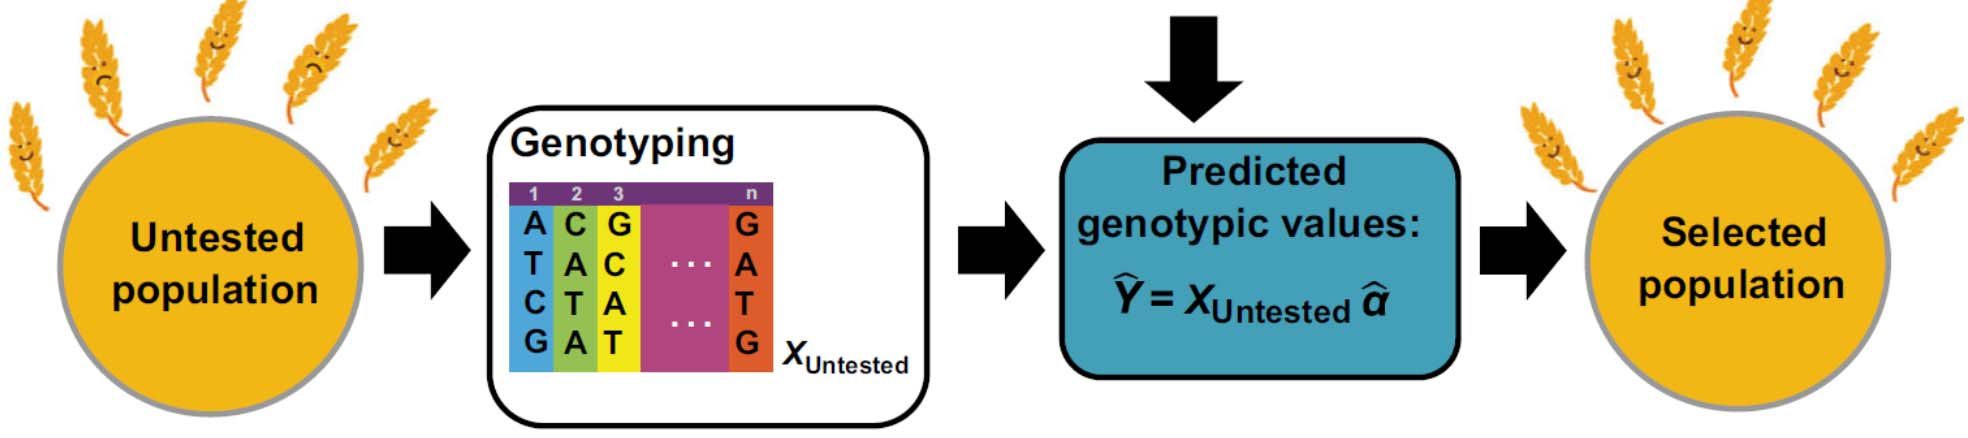 Genomisk seleksjon Kilde: Zhao et al.